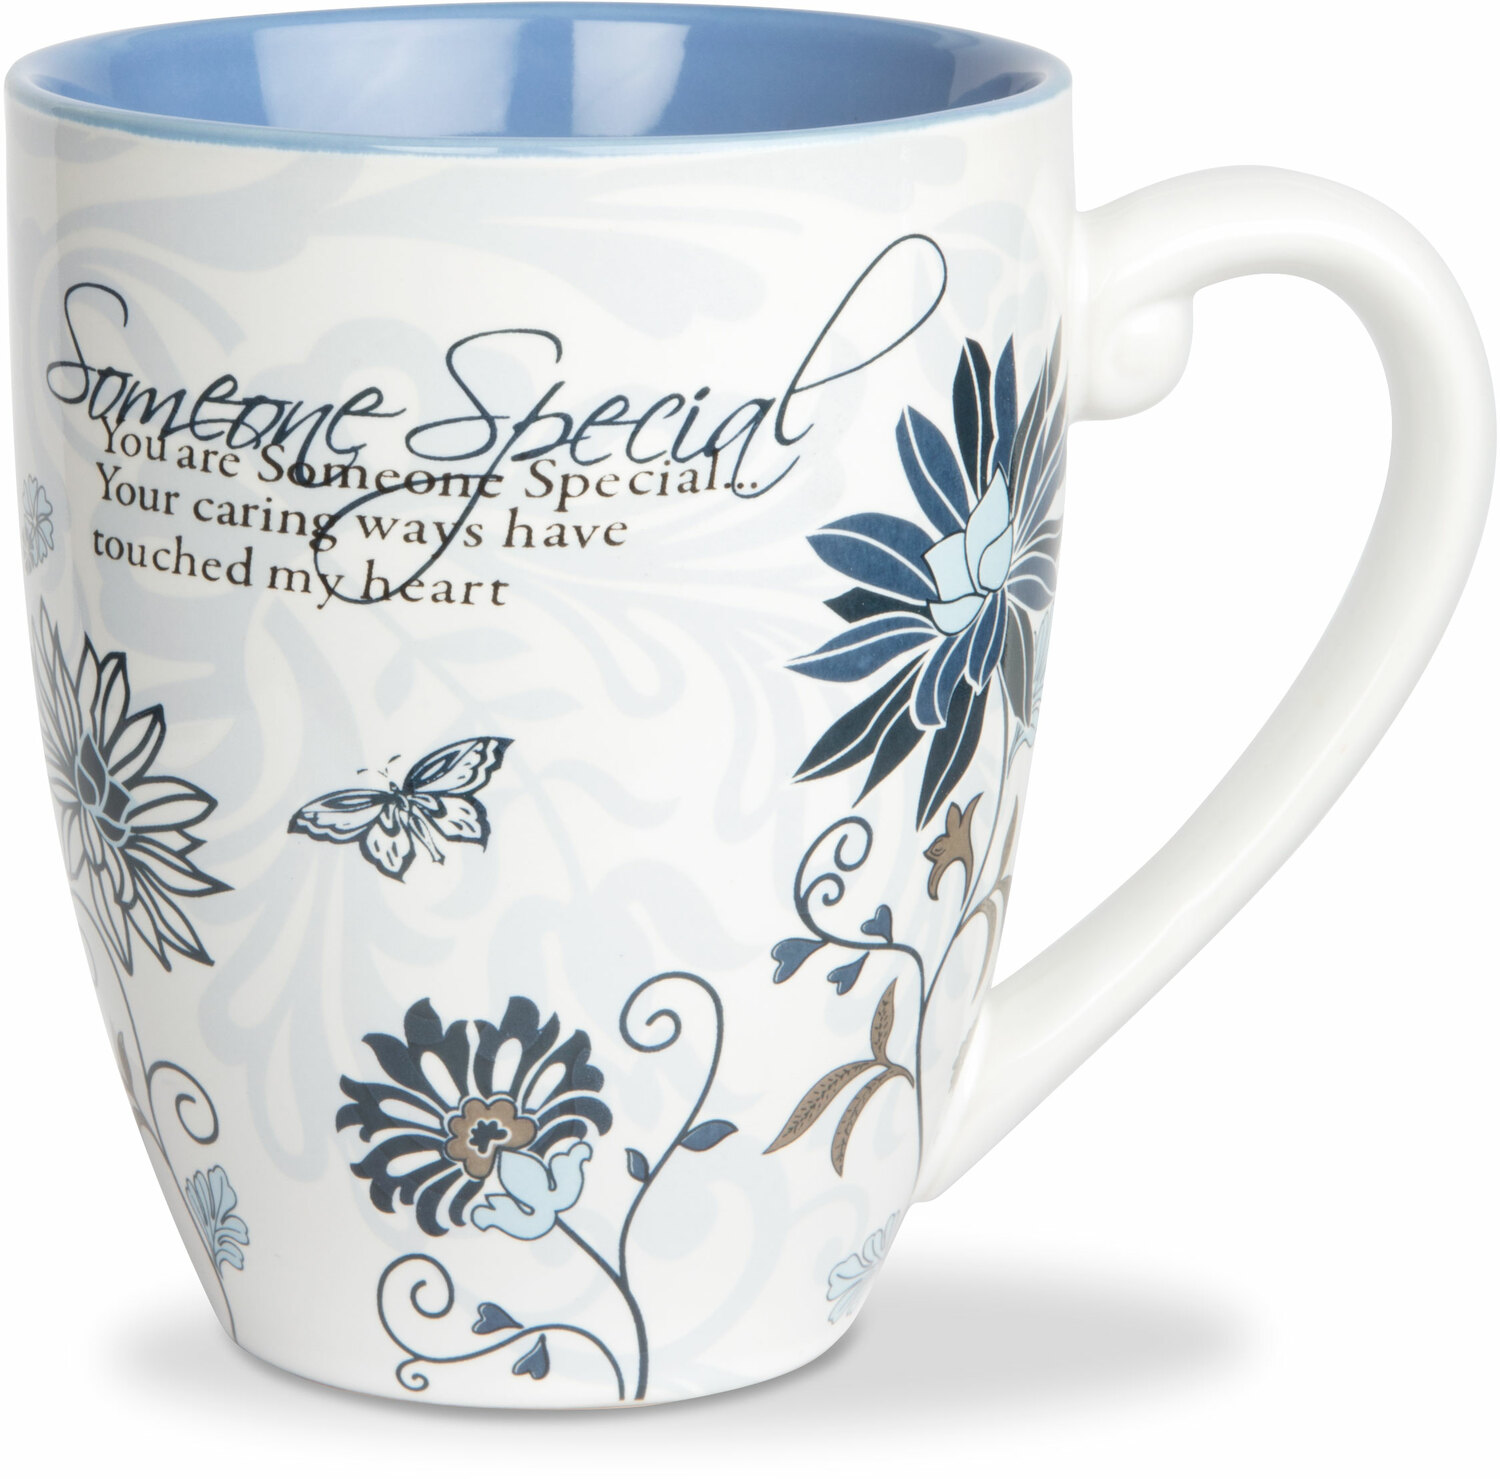 Someone Special by Mark My Words - <em>Special</em> - Large Coffee/Tea Mug, 20 oz -